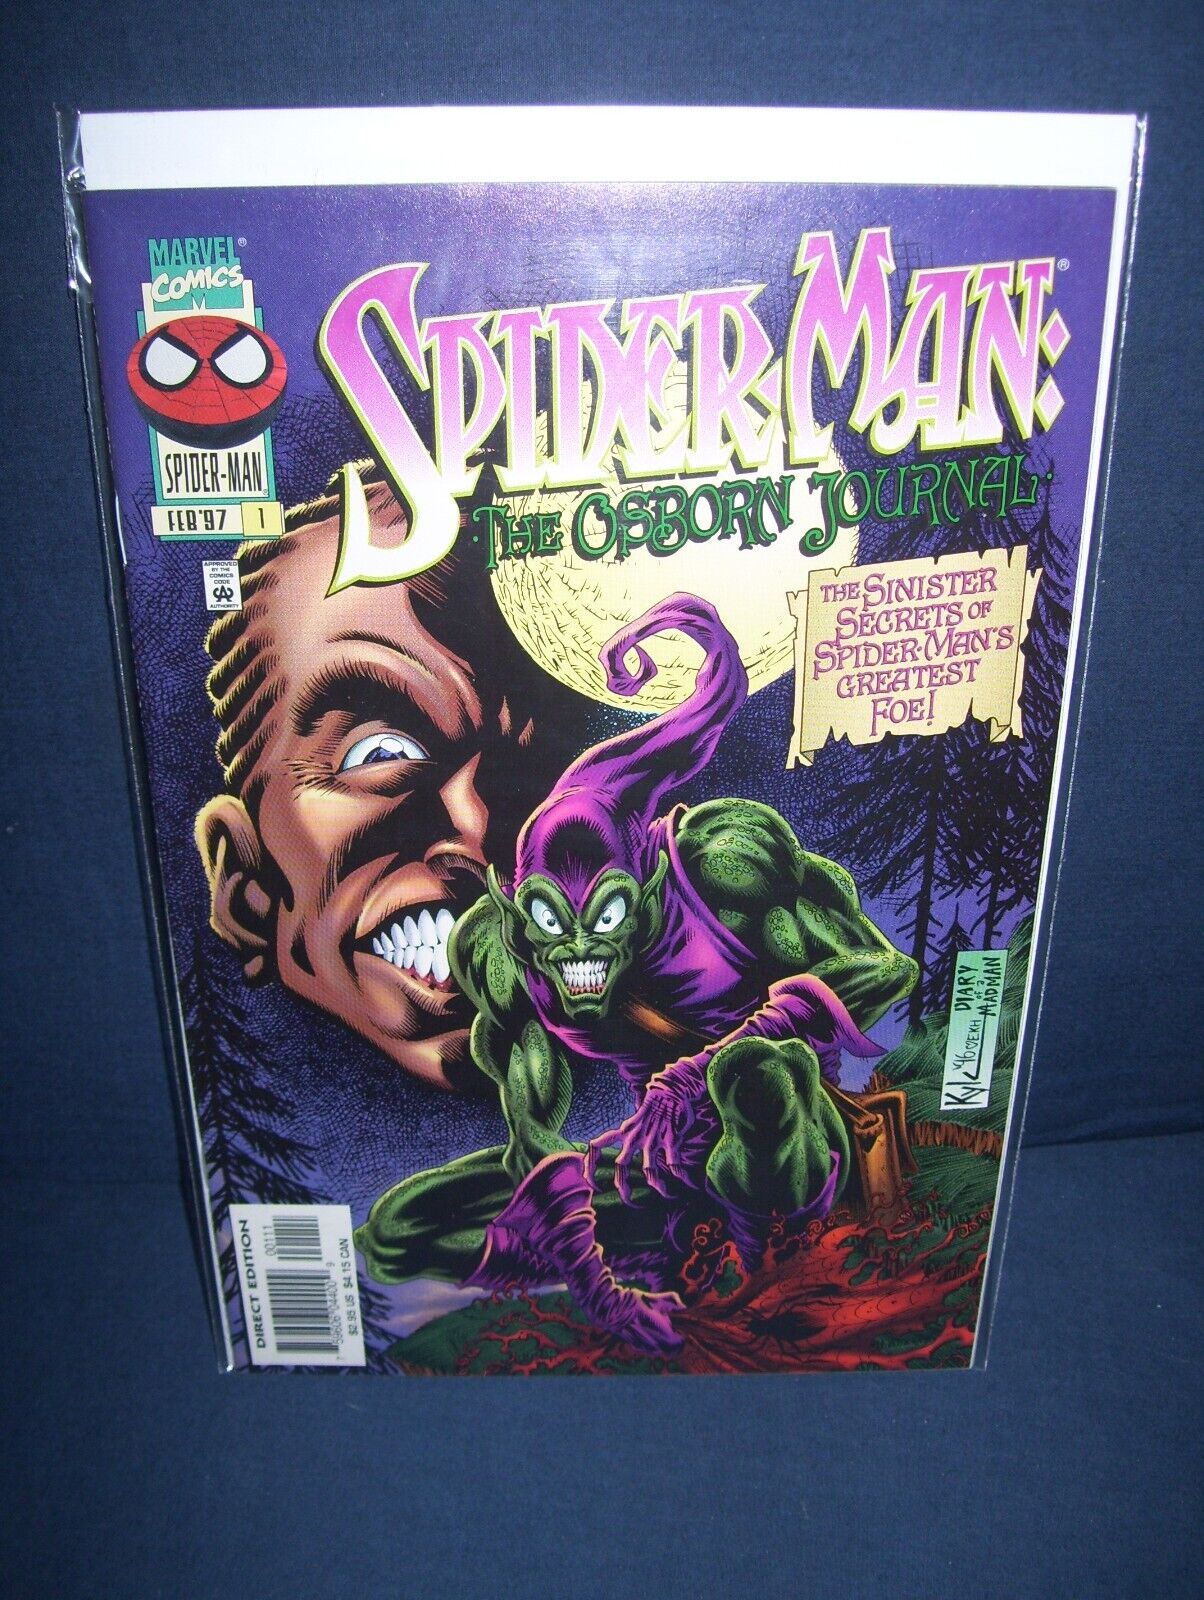 Spider-Man: The Osborn Journal #1 Marvel Comics 1997 with Bag & Board